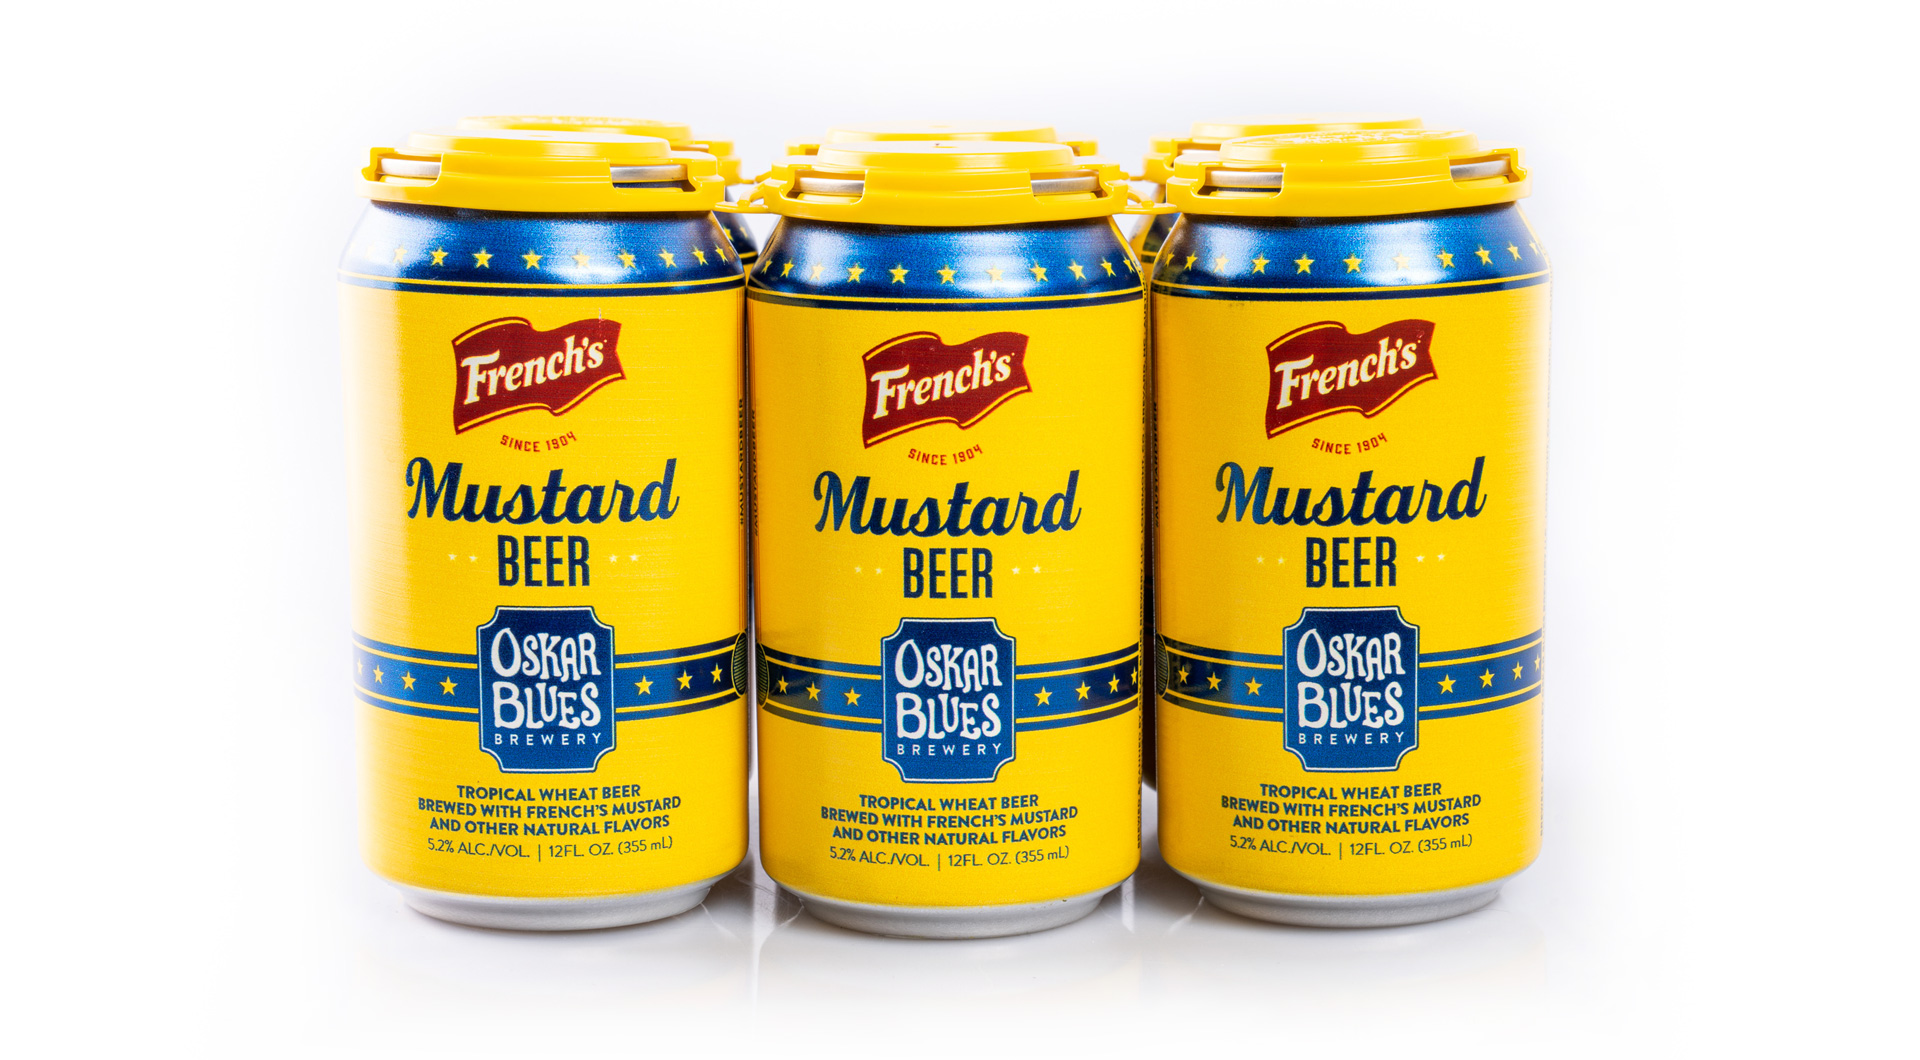 Mustard beer